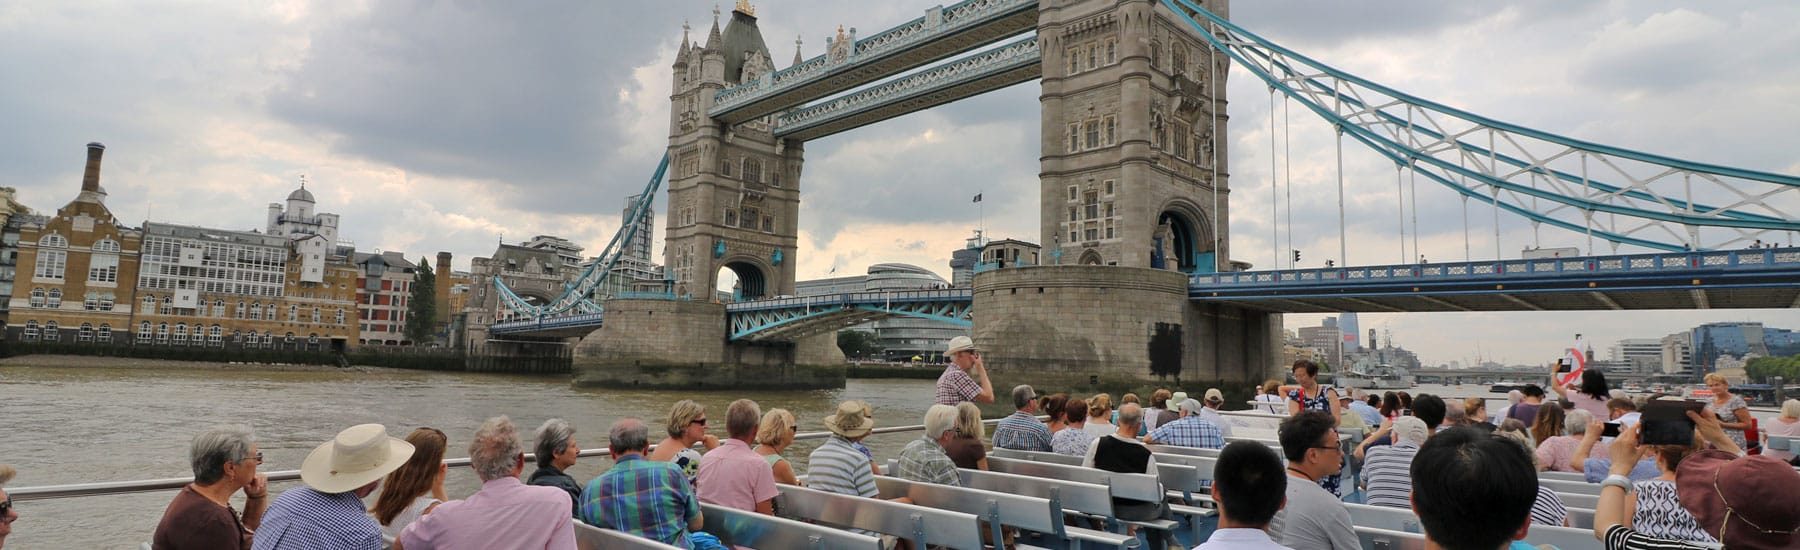 M.V Thomas Doggett passant Tower Bridge, Londres